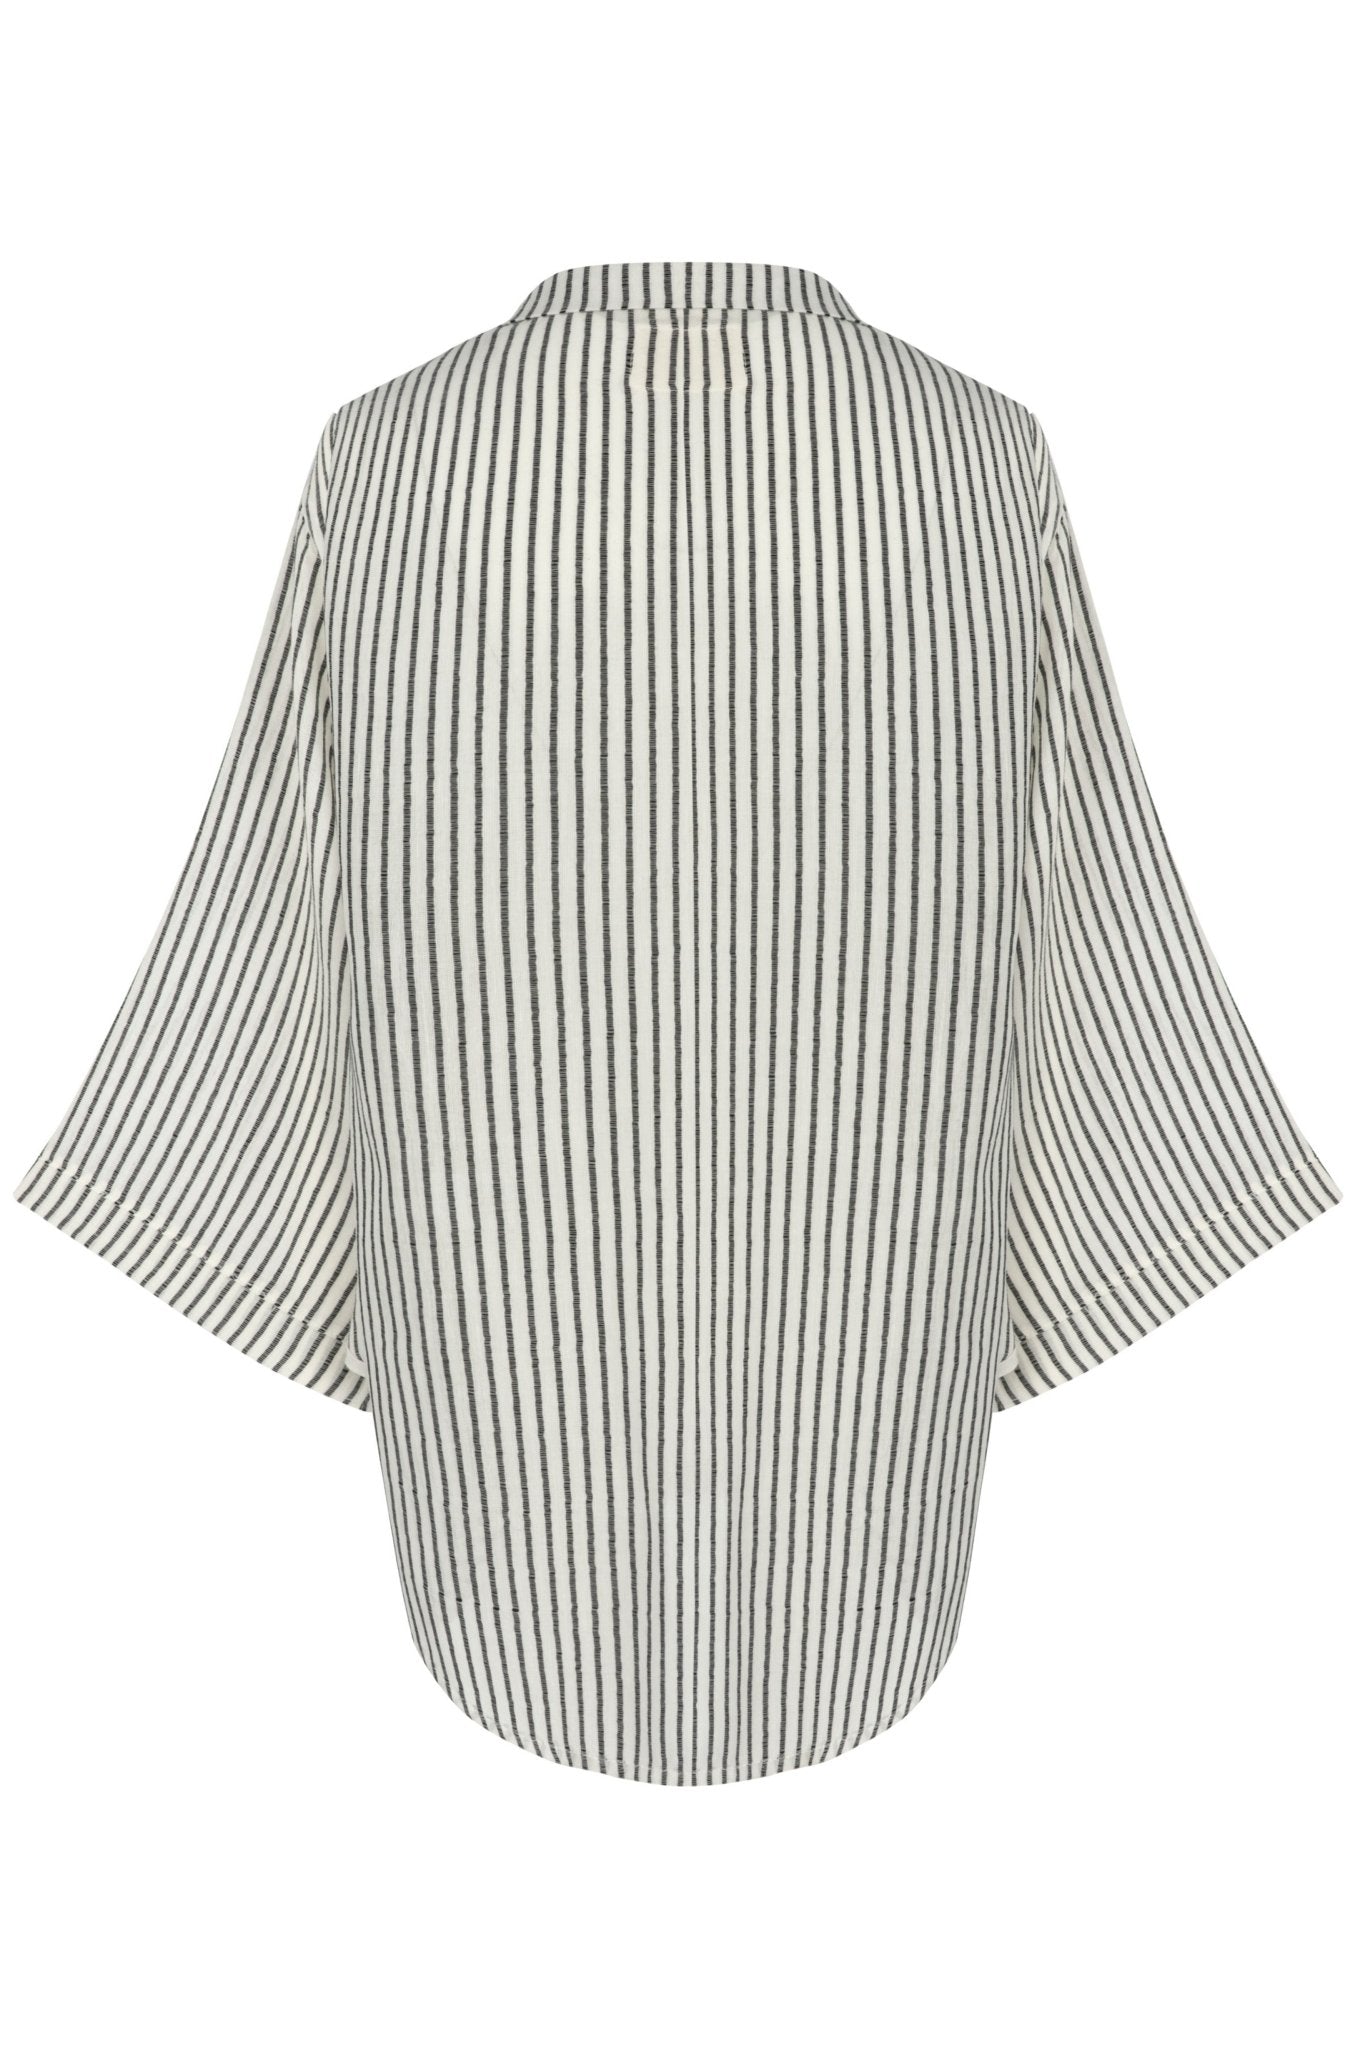 Sade Top - Black Stripes by The Handloom